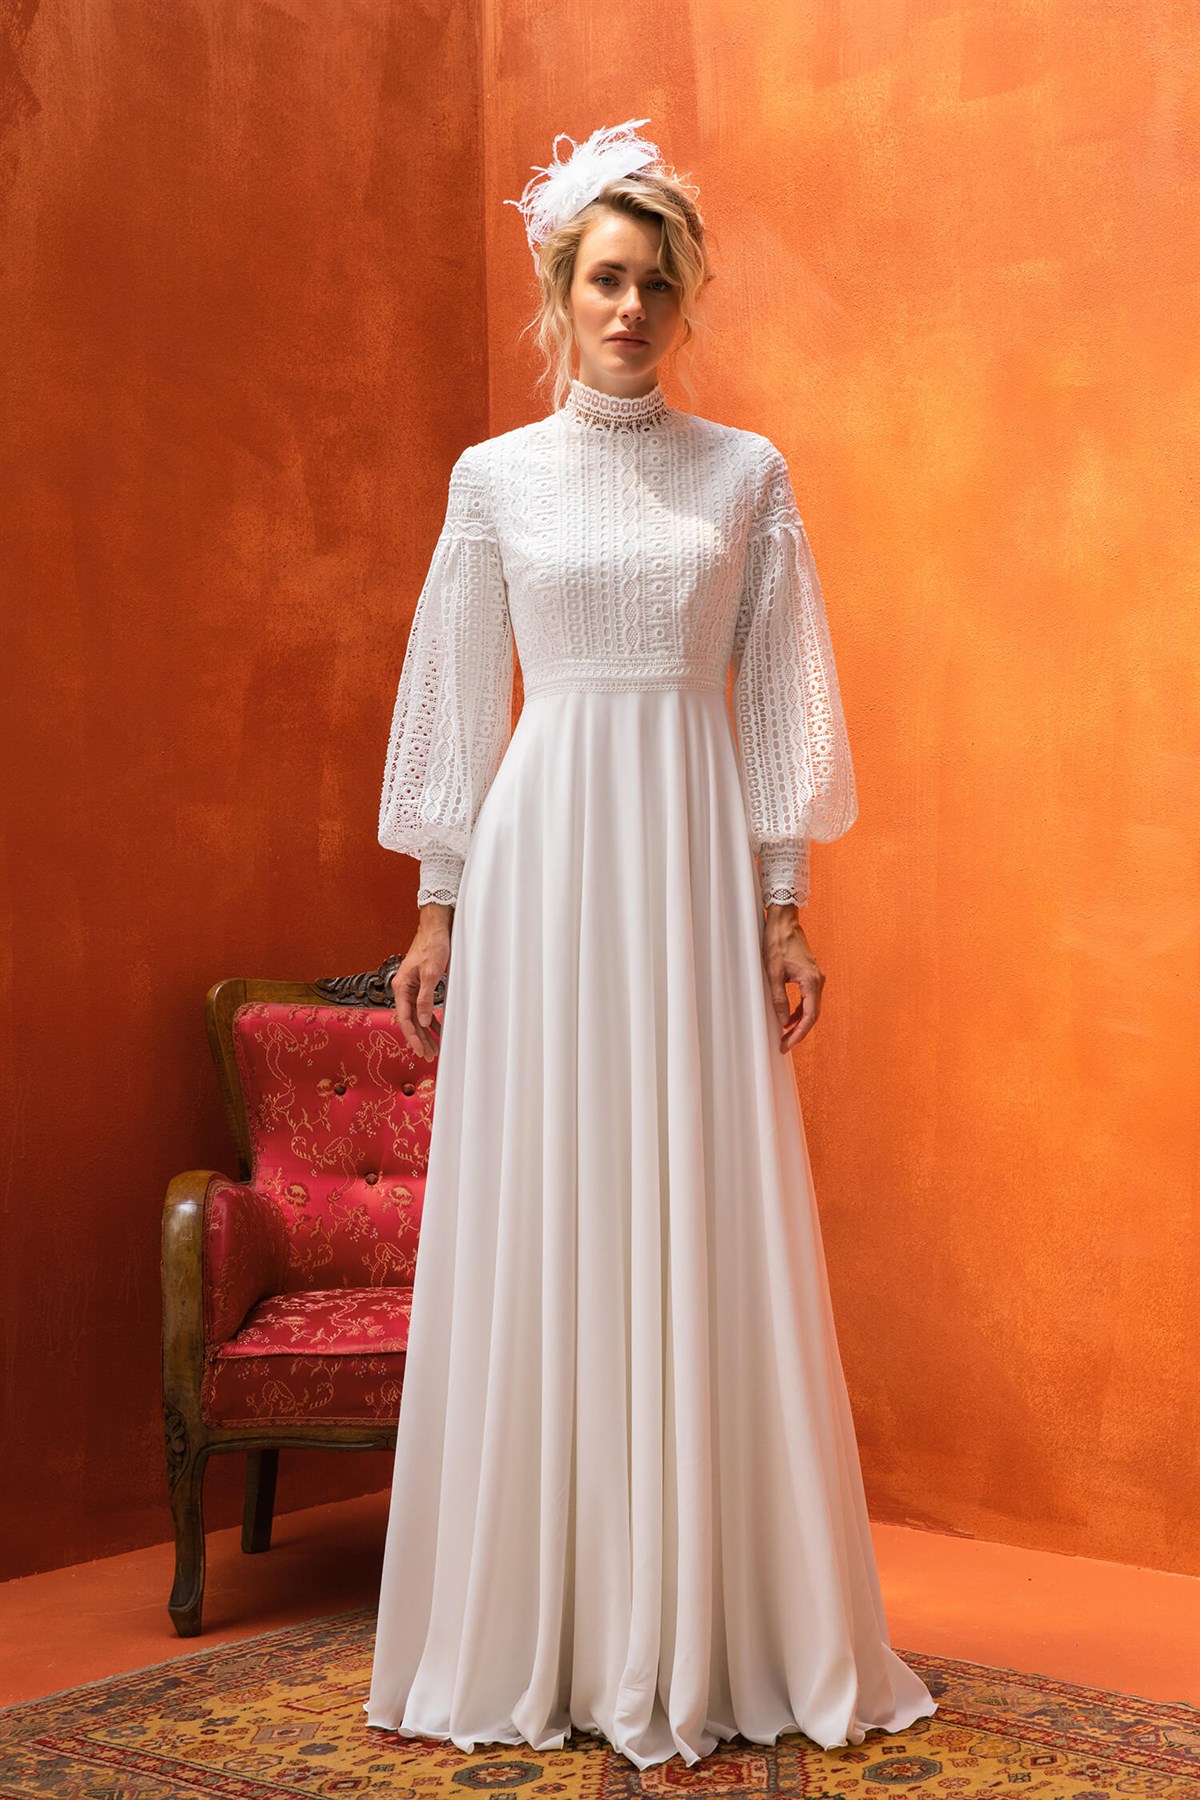 Vintage Cotton Lace Garnish Wedding Dress